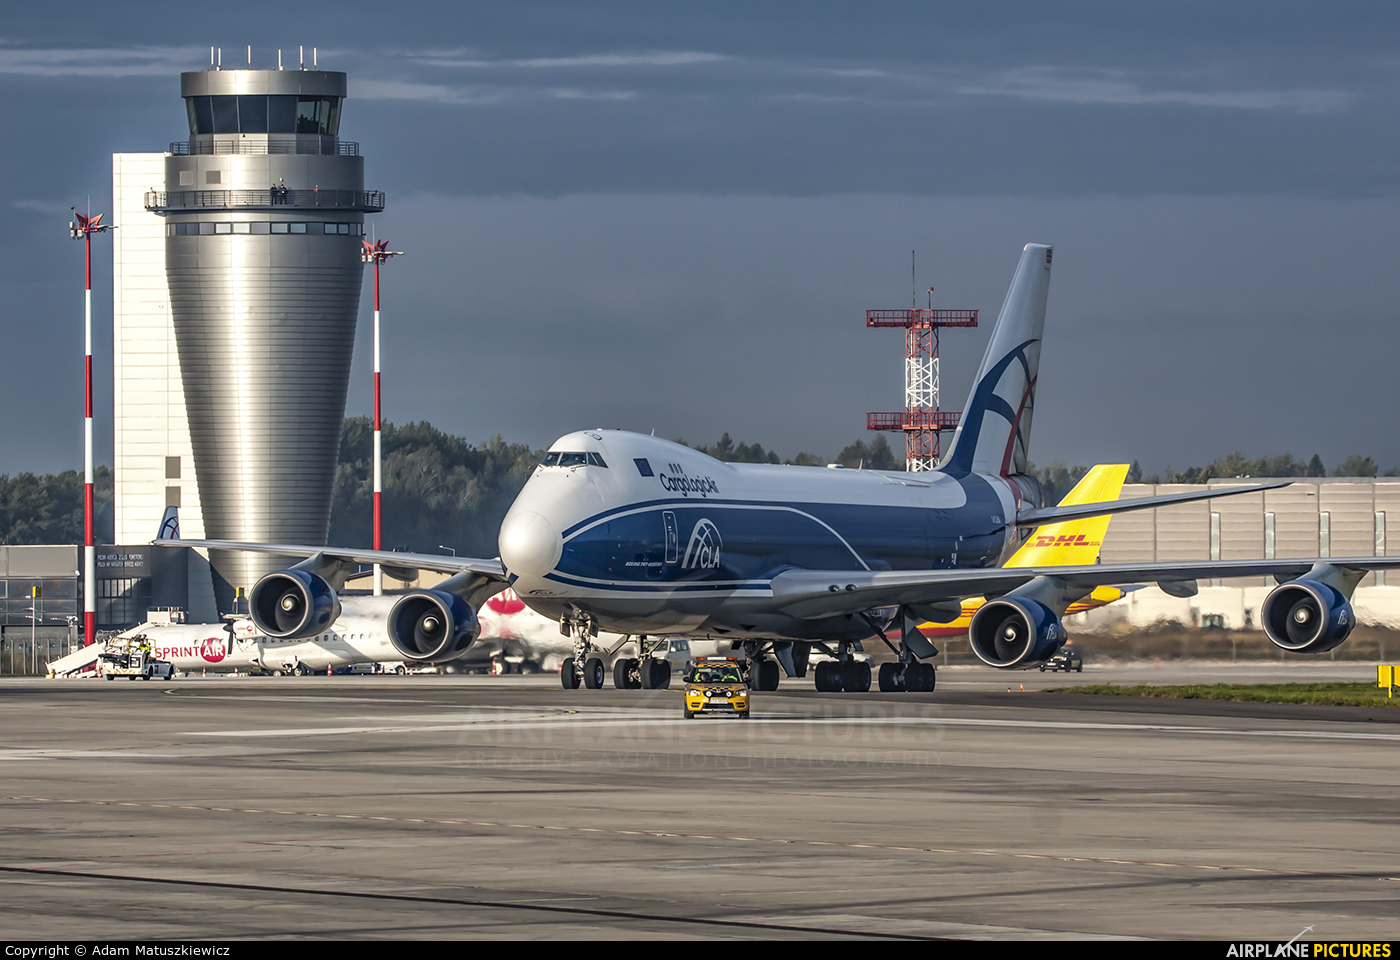 Cargologicair G-CLBA aircraft at Katowice - Pyrzowice